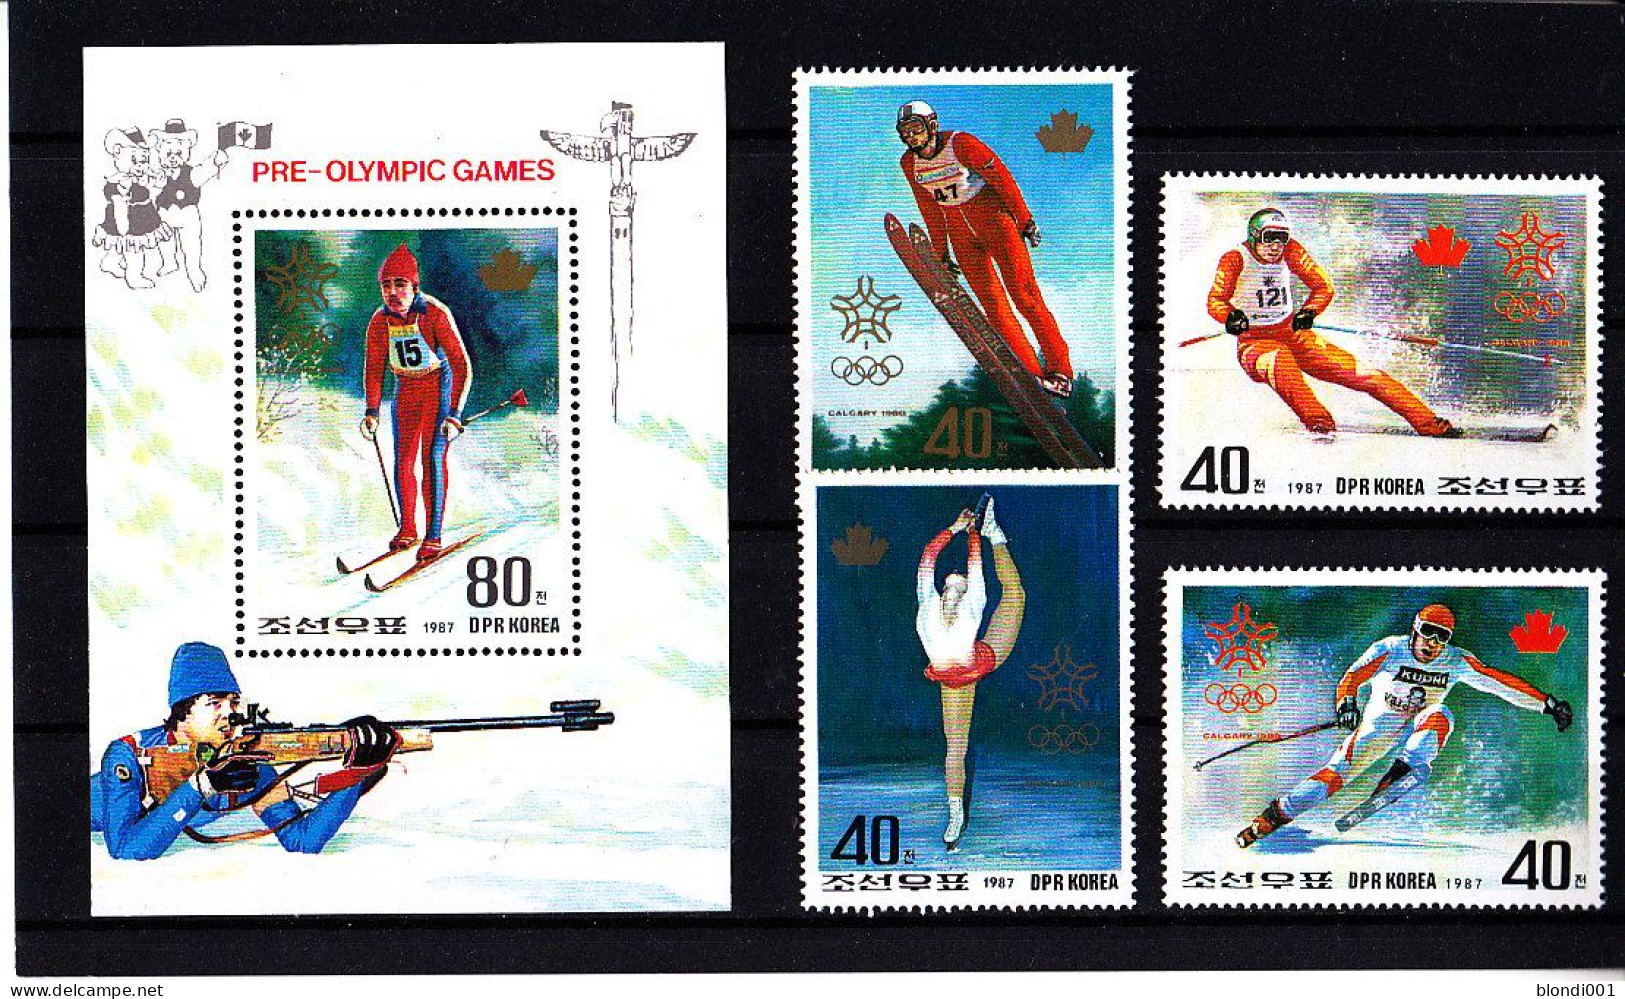 Olympics 1988 - Figure Skate - KOREA - S/S+Set MNH - Hiver 1988: Calgary